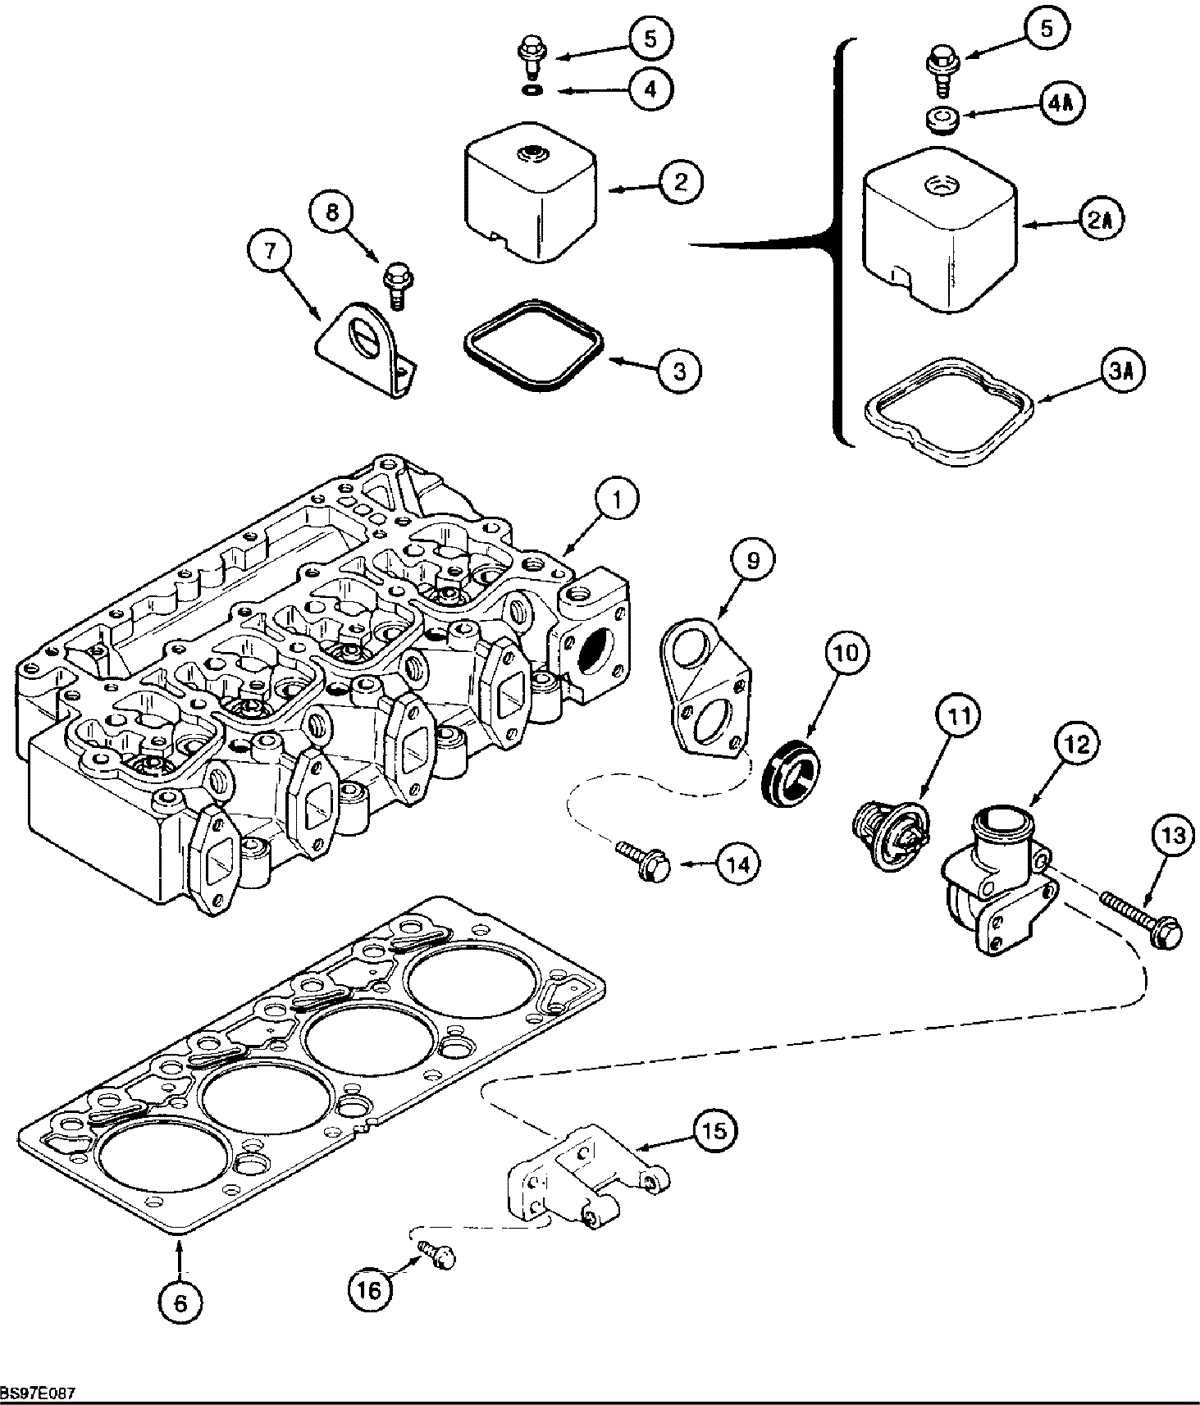 lucas acr alternator wiring diagram